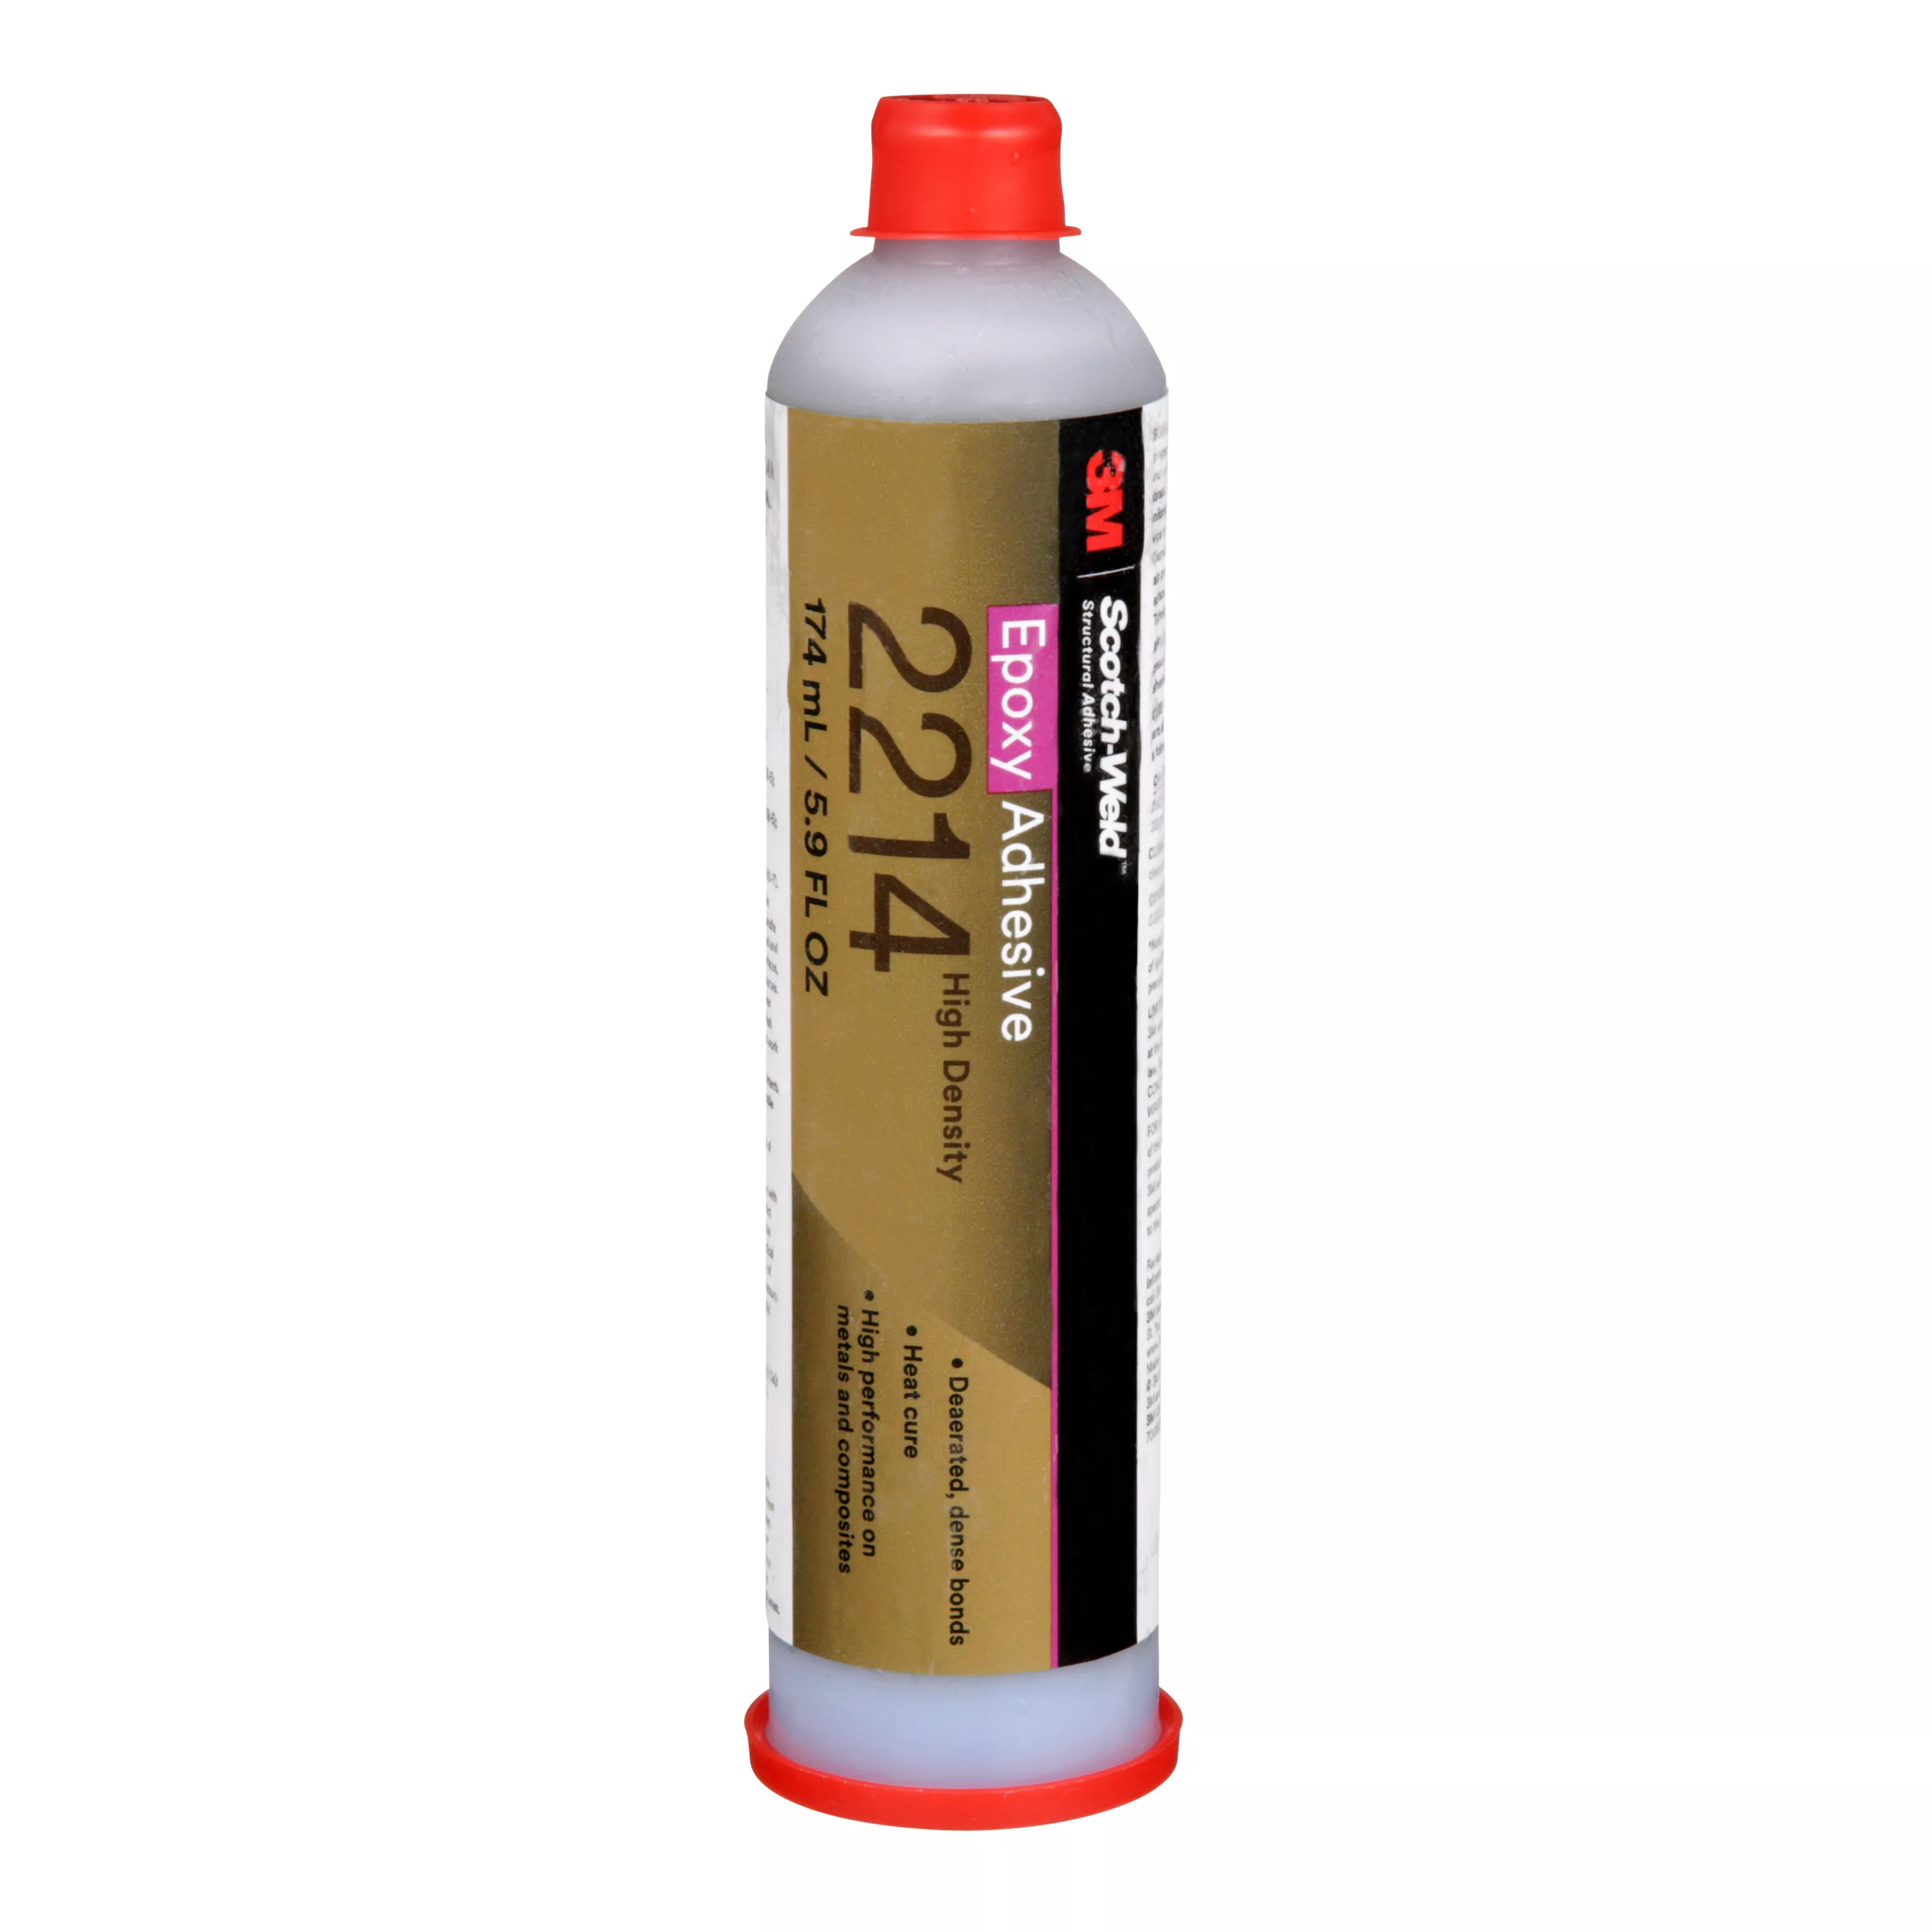 3M™ Scotch-Weld™ Epoxy Adhesive 2214, Hi-Density, Gray, 6 fl oz
Cartridge, 6 Each/Case